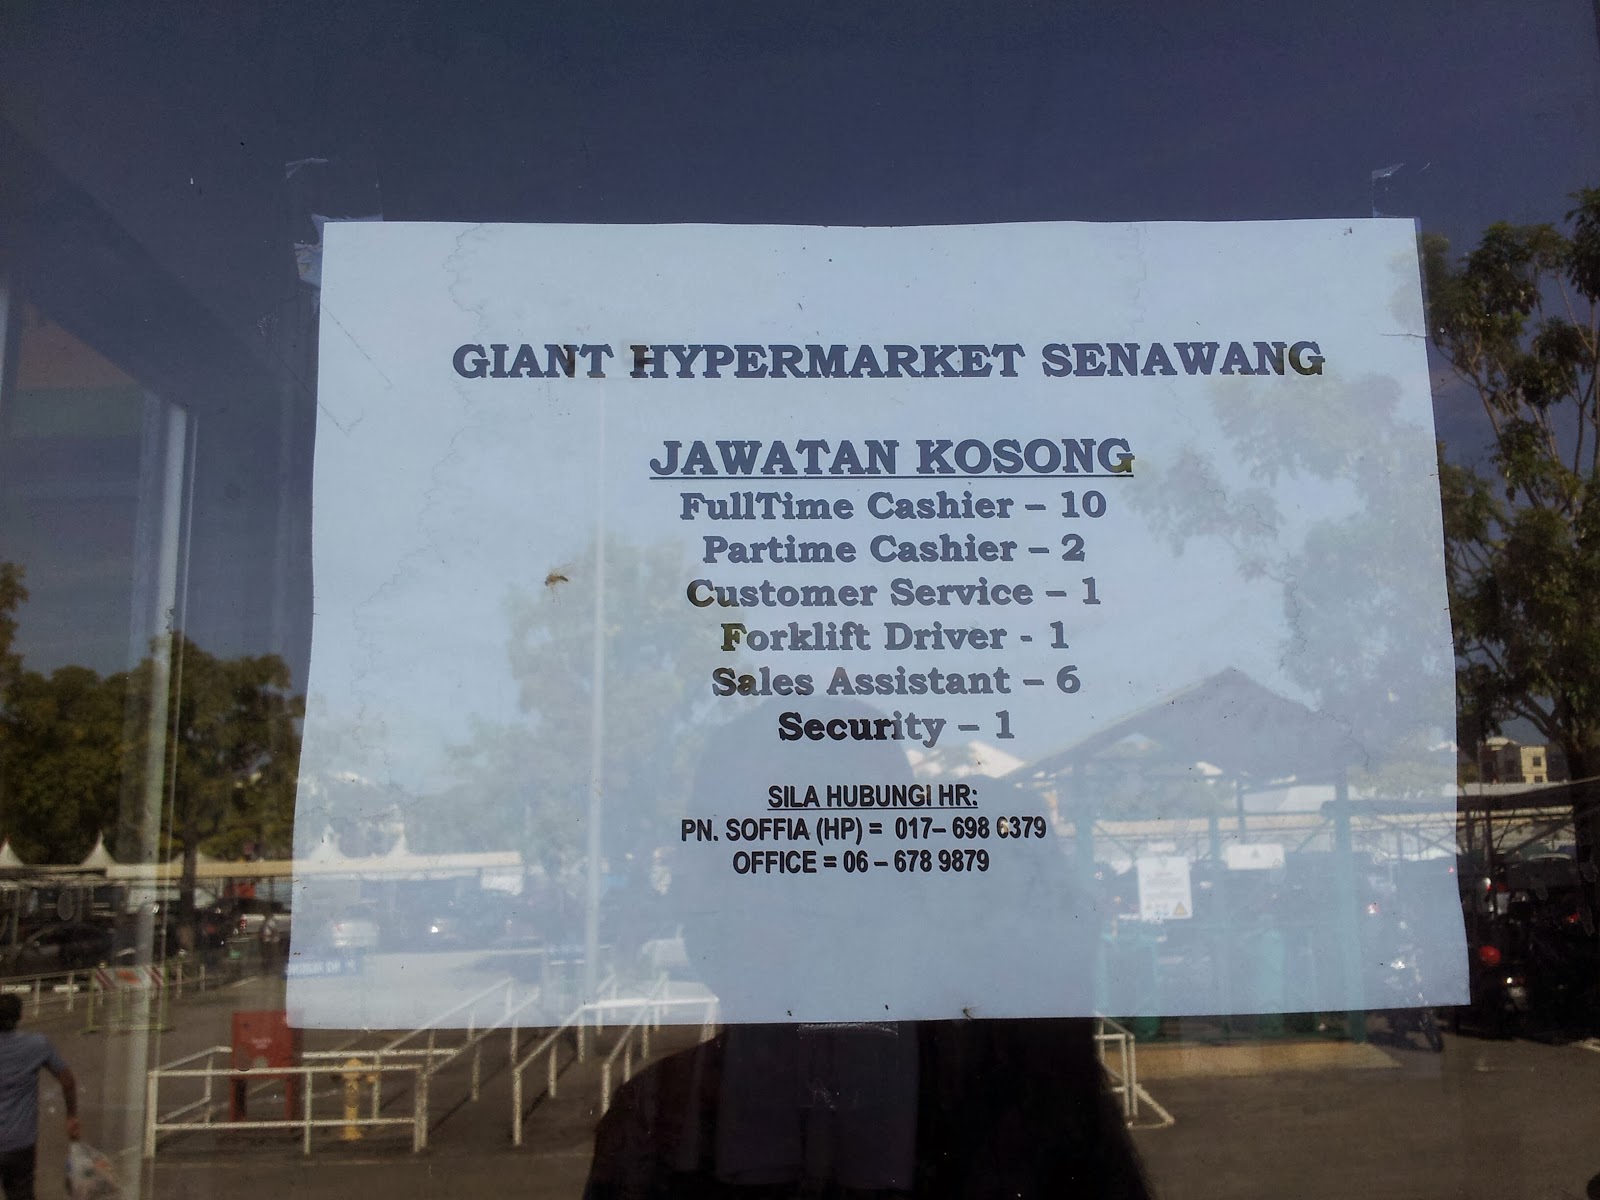 Jobs Malaysia: Kerja Kosong di Hypermarket Giant Senawang 